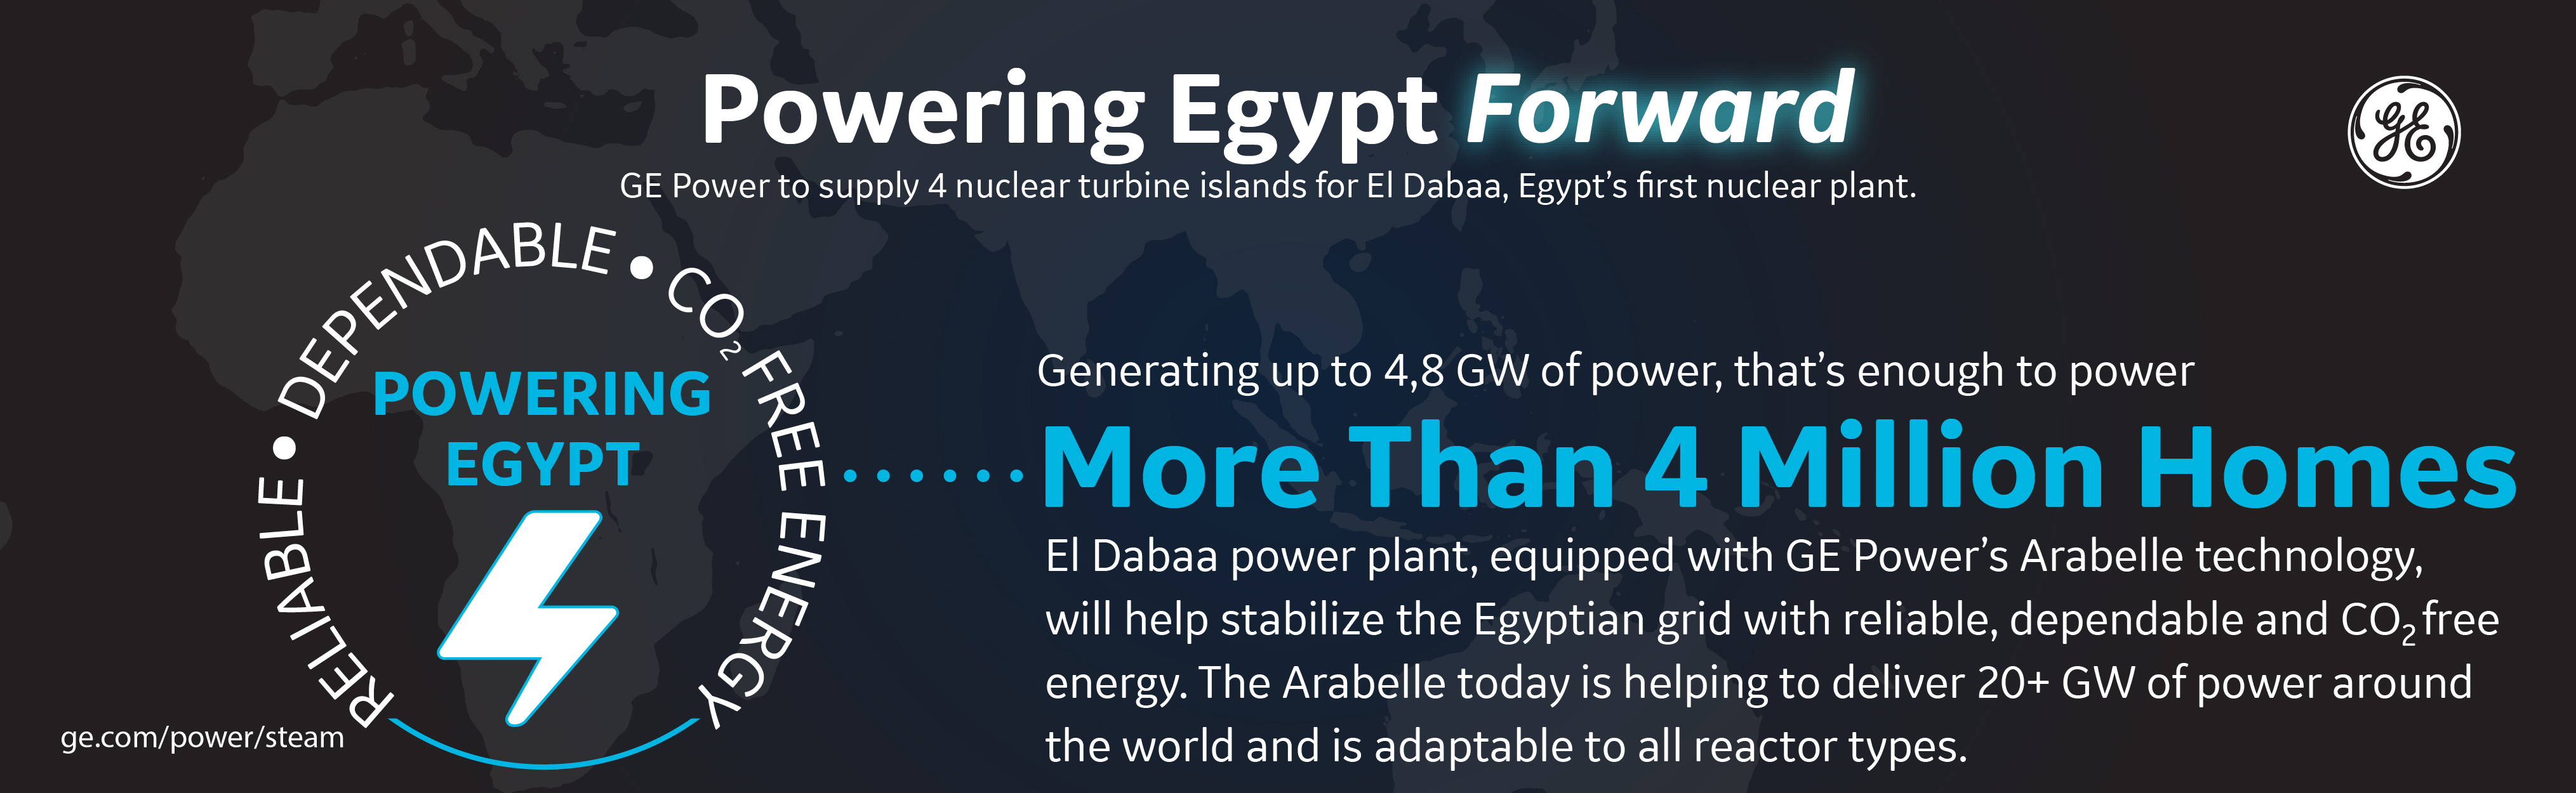 Power Egypt Forward